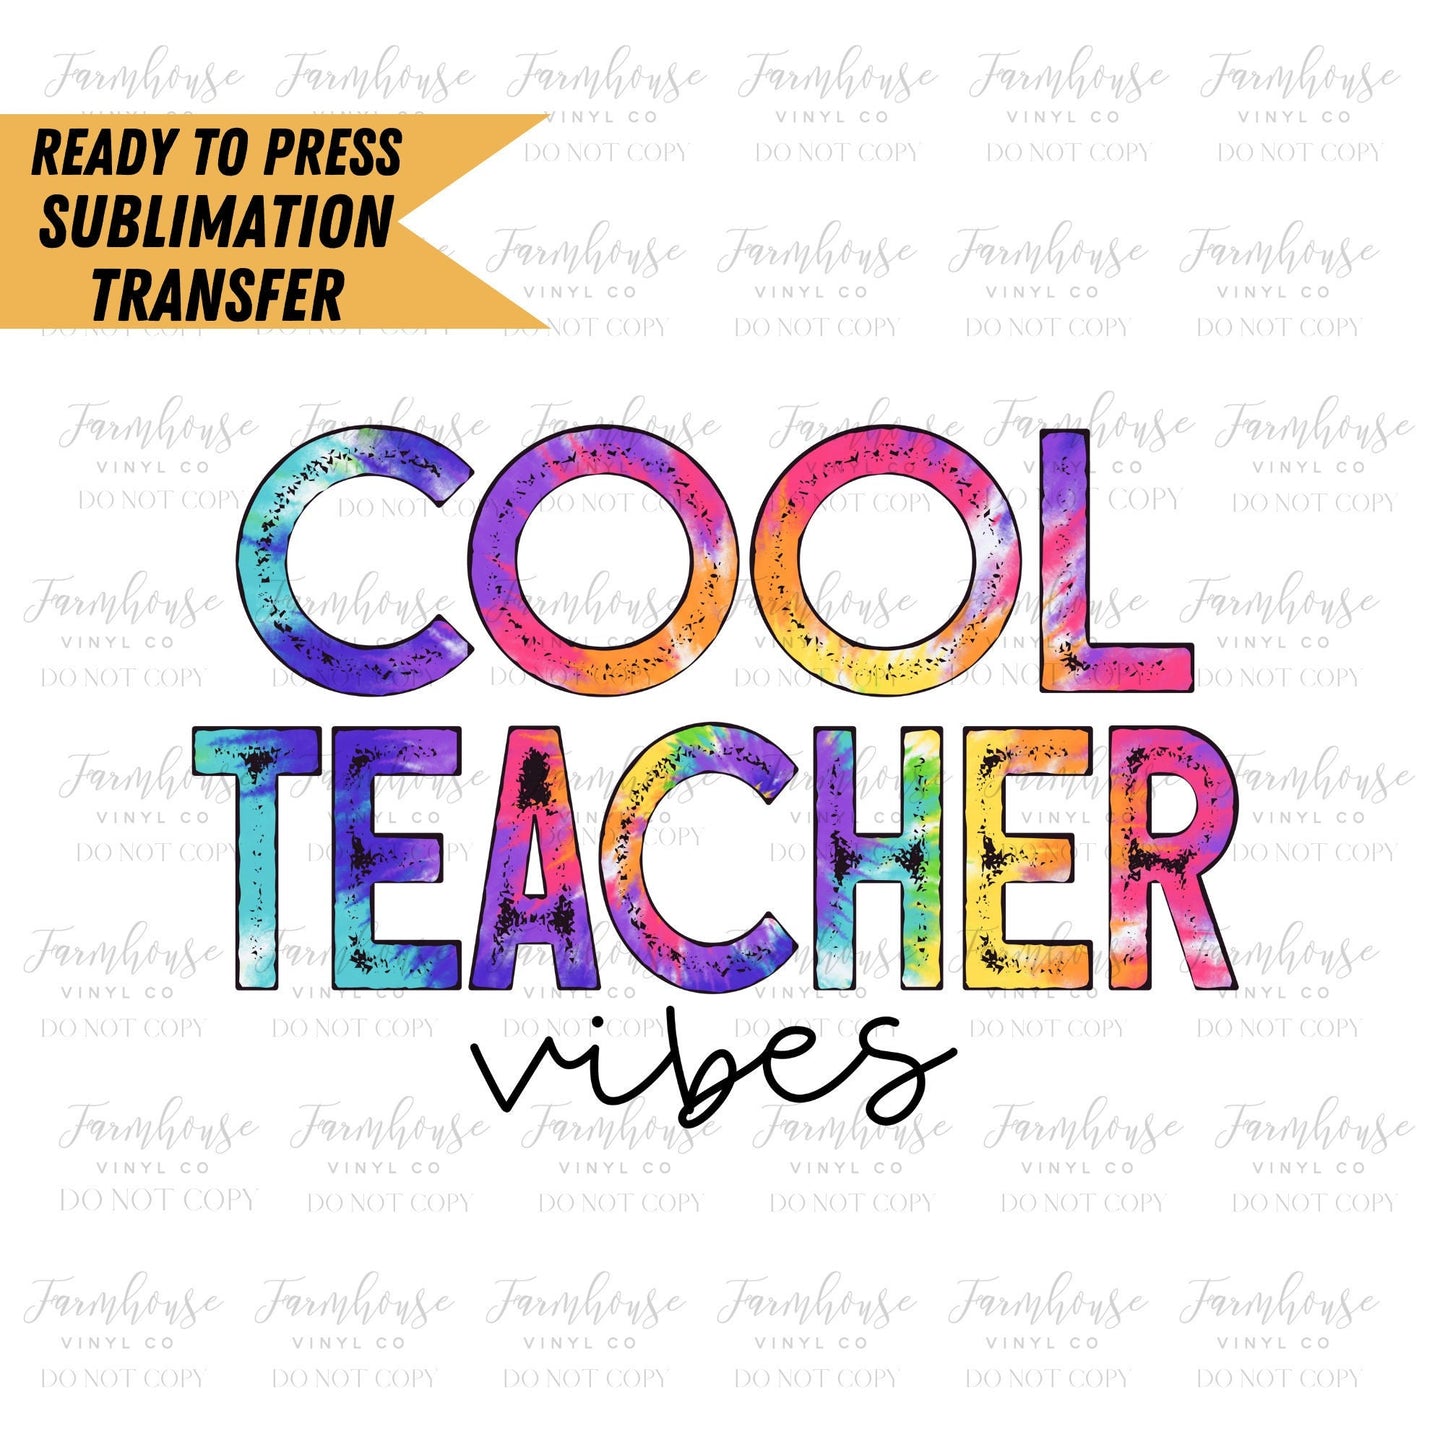 Cool Teacher Vibes, Ready to Press Sublimation Transfer, Sublimation Transfers, Heat Transfer, Ready to Press, Teacher, 1st Day, Tie Dye - Farmhouse Vinyl Co